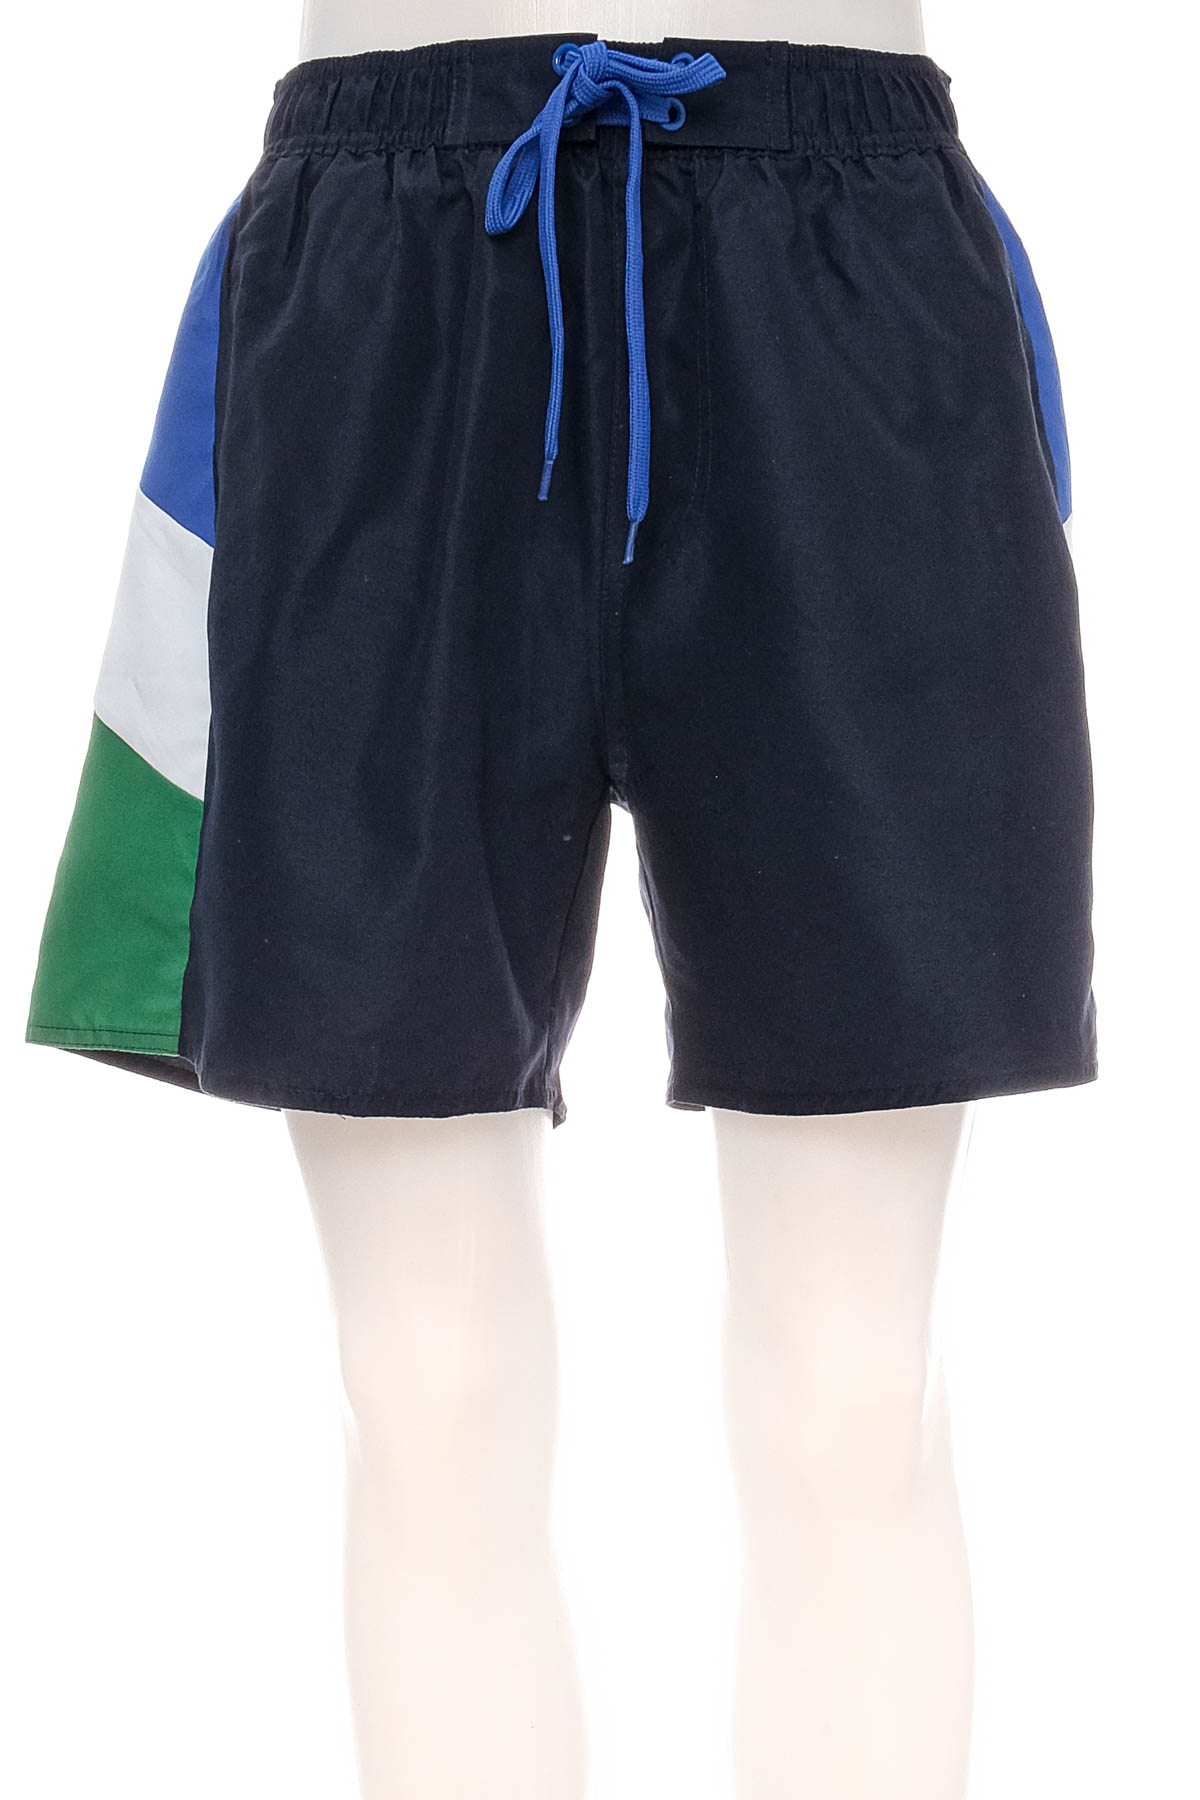 Men's shorts - AproductZ - 0